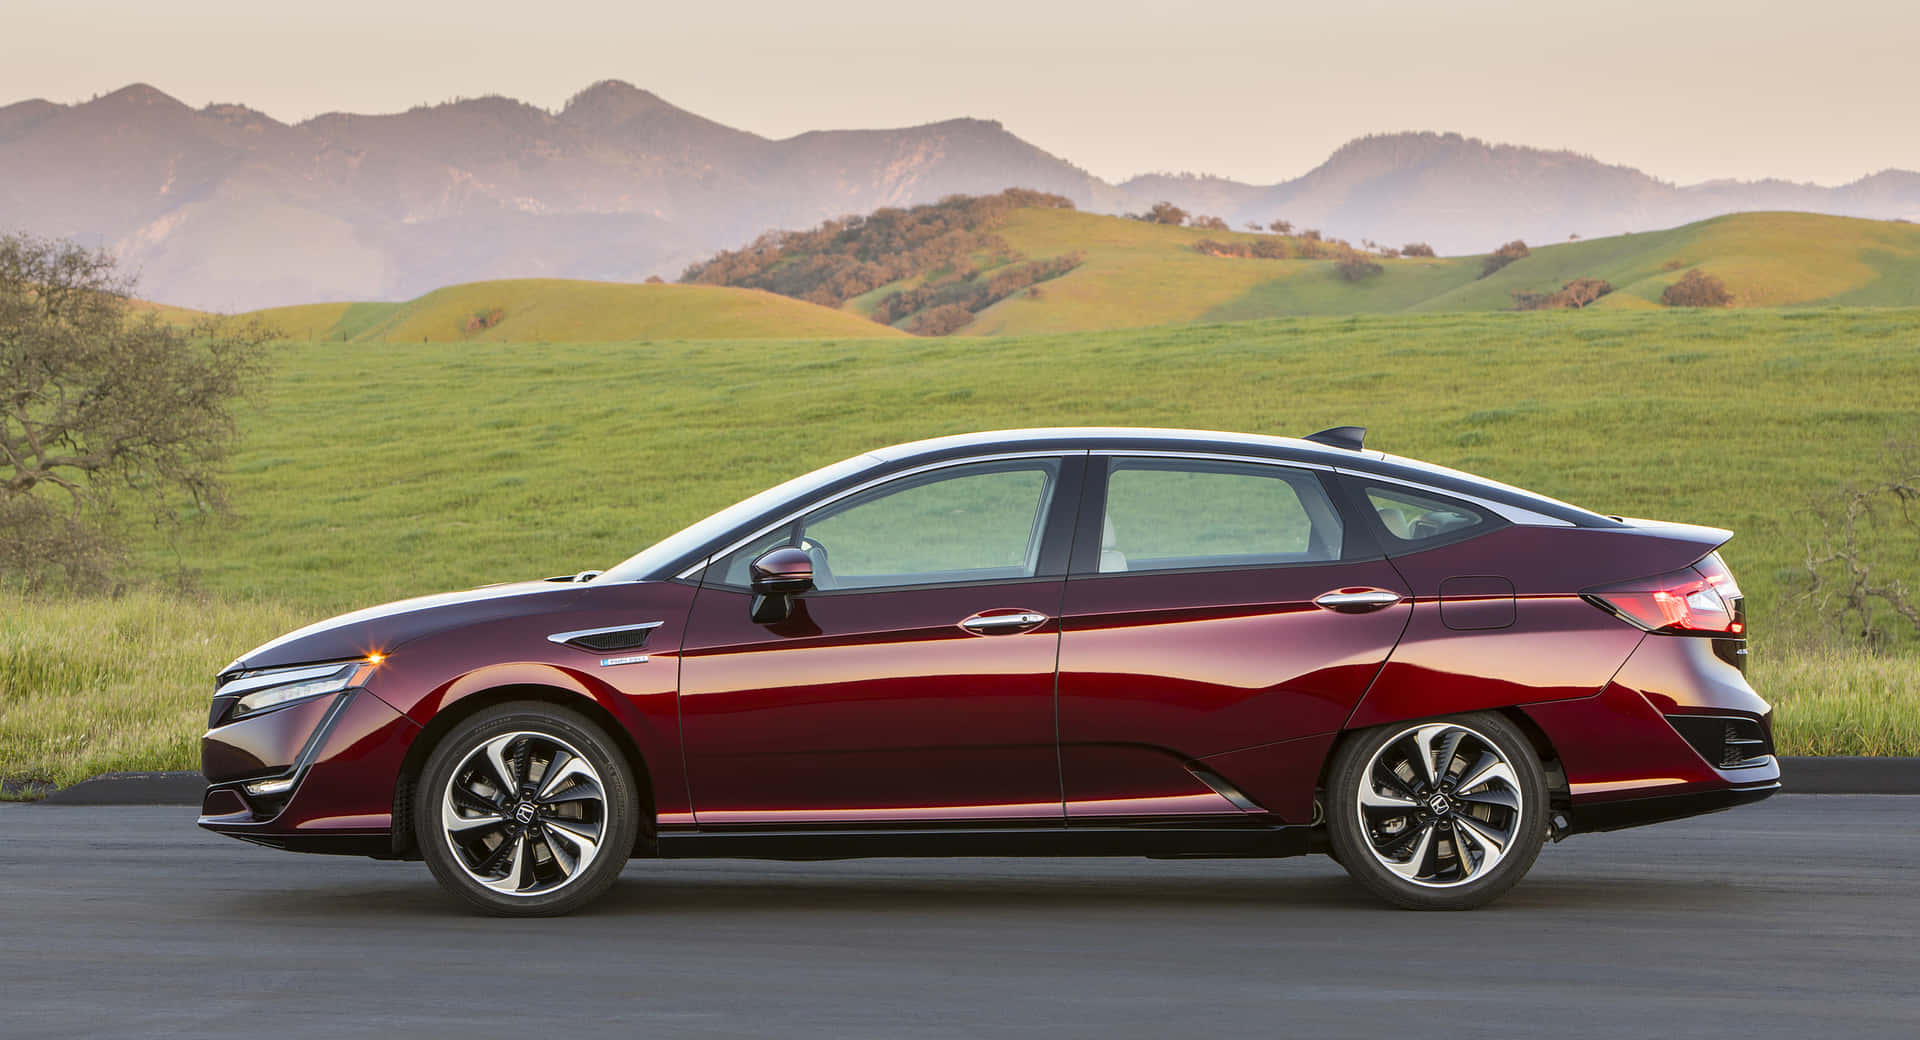 Caption: Honda Clarity - High Performance, Zero Emissions Wallpaper